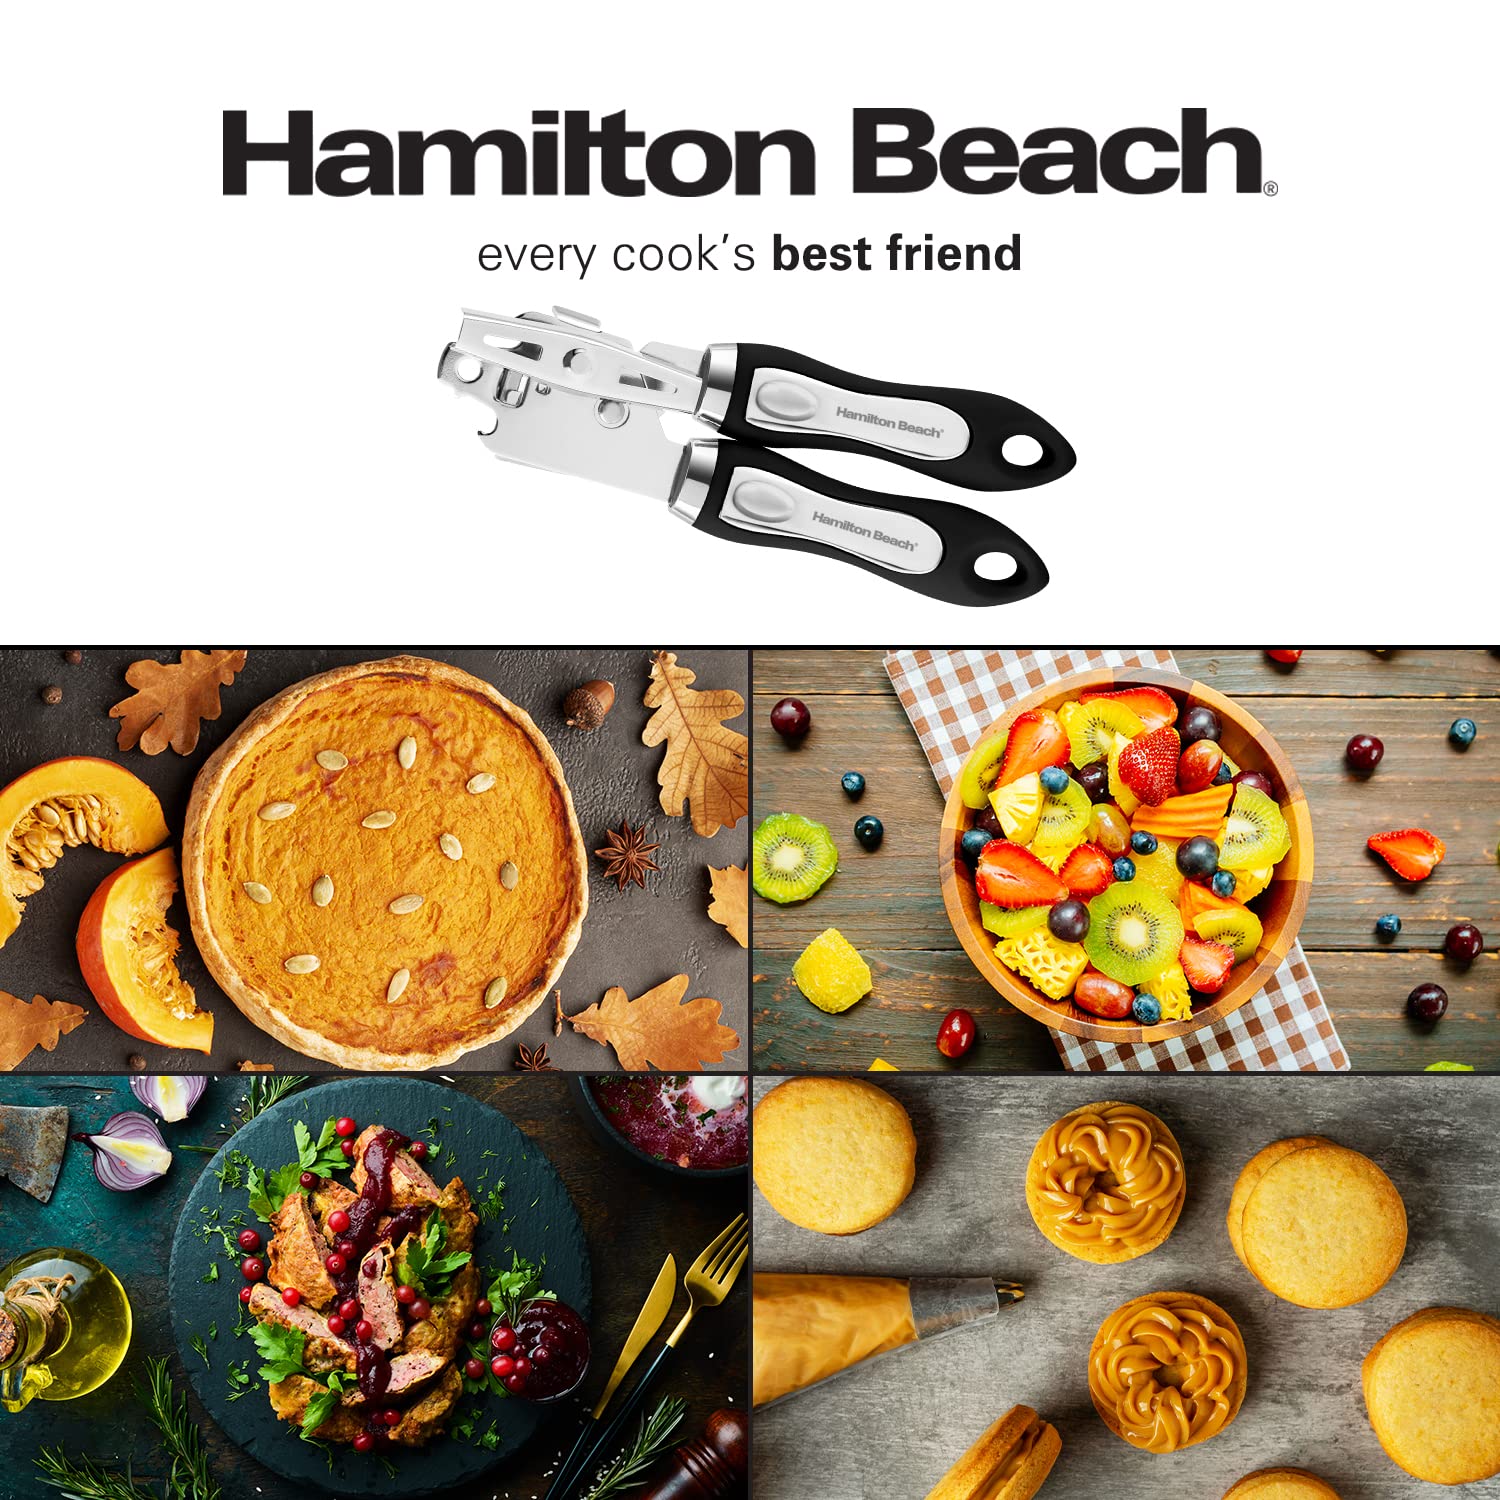 Hamilton Beach Kitchen Gadgets Are on Sale at